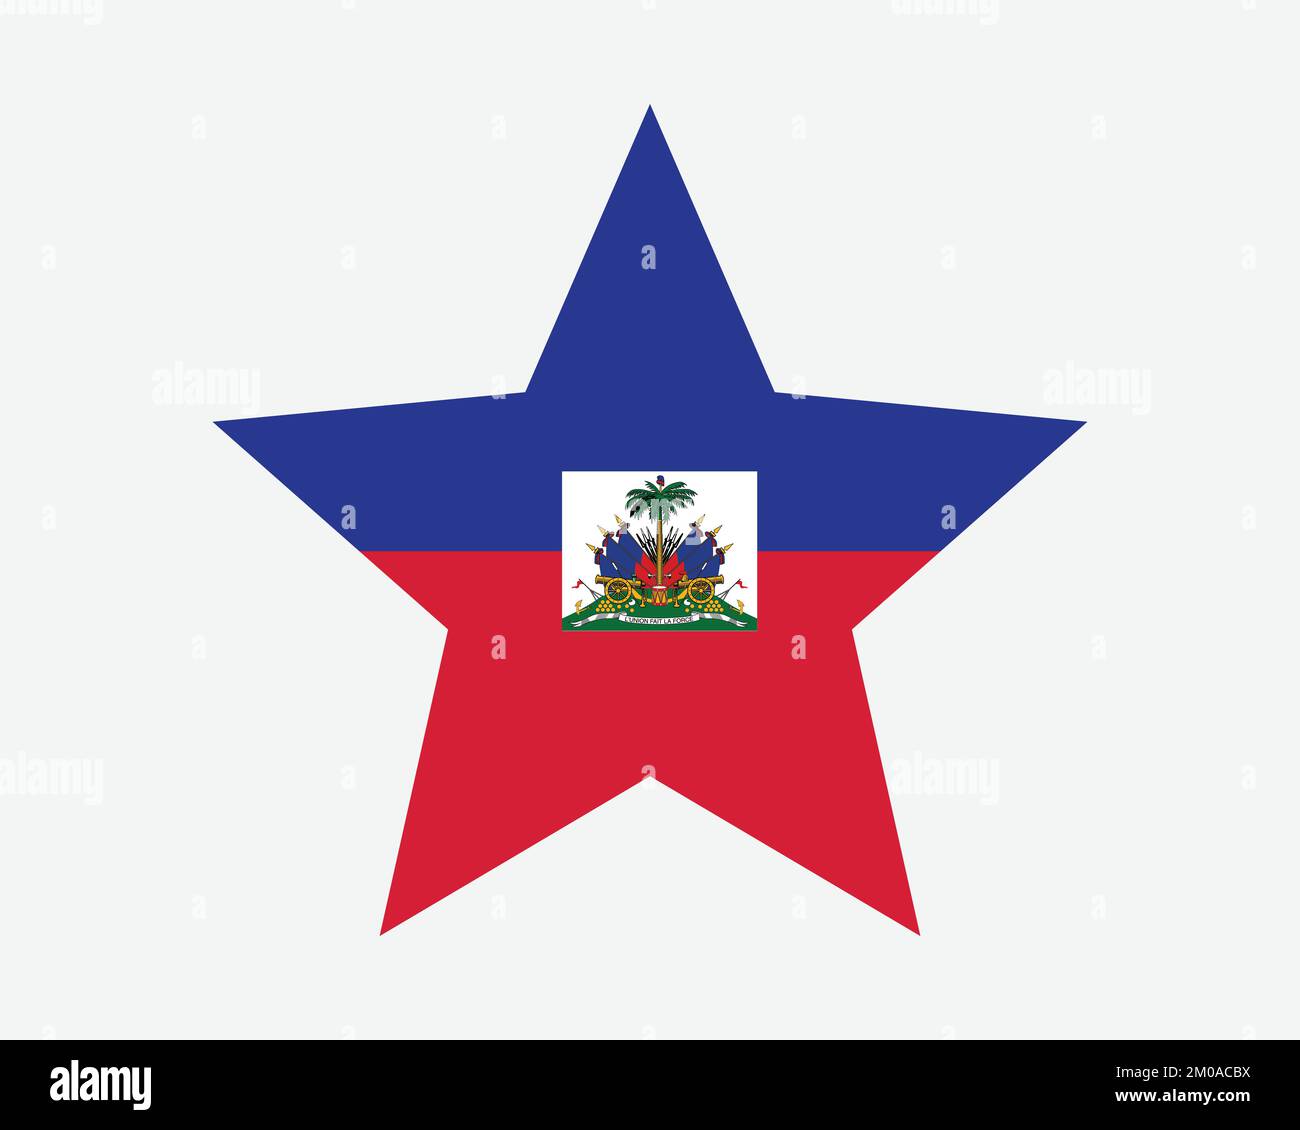 Haiti Star Flag. Haitian Star Shape Flag. Republic of Haiti Country National Banner Icon Symbol Vector Flat Artwork Graphic Illustration Stock Vector